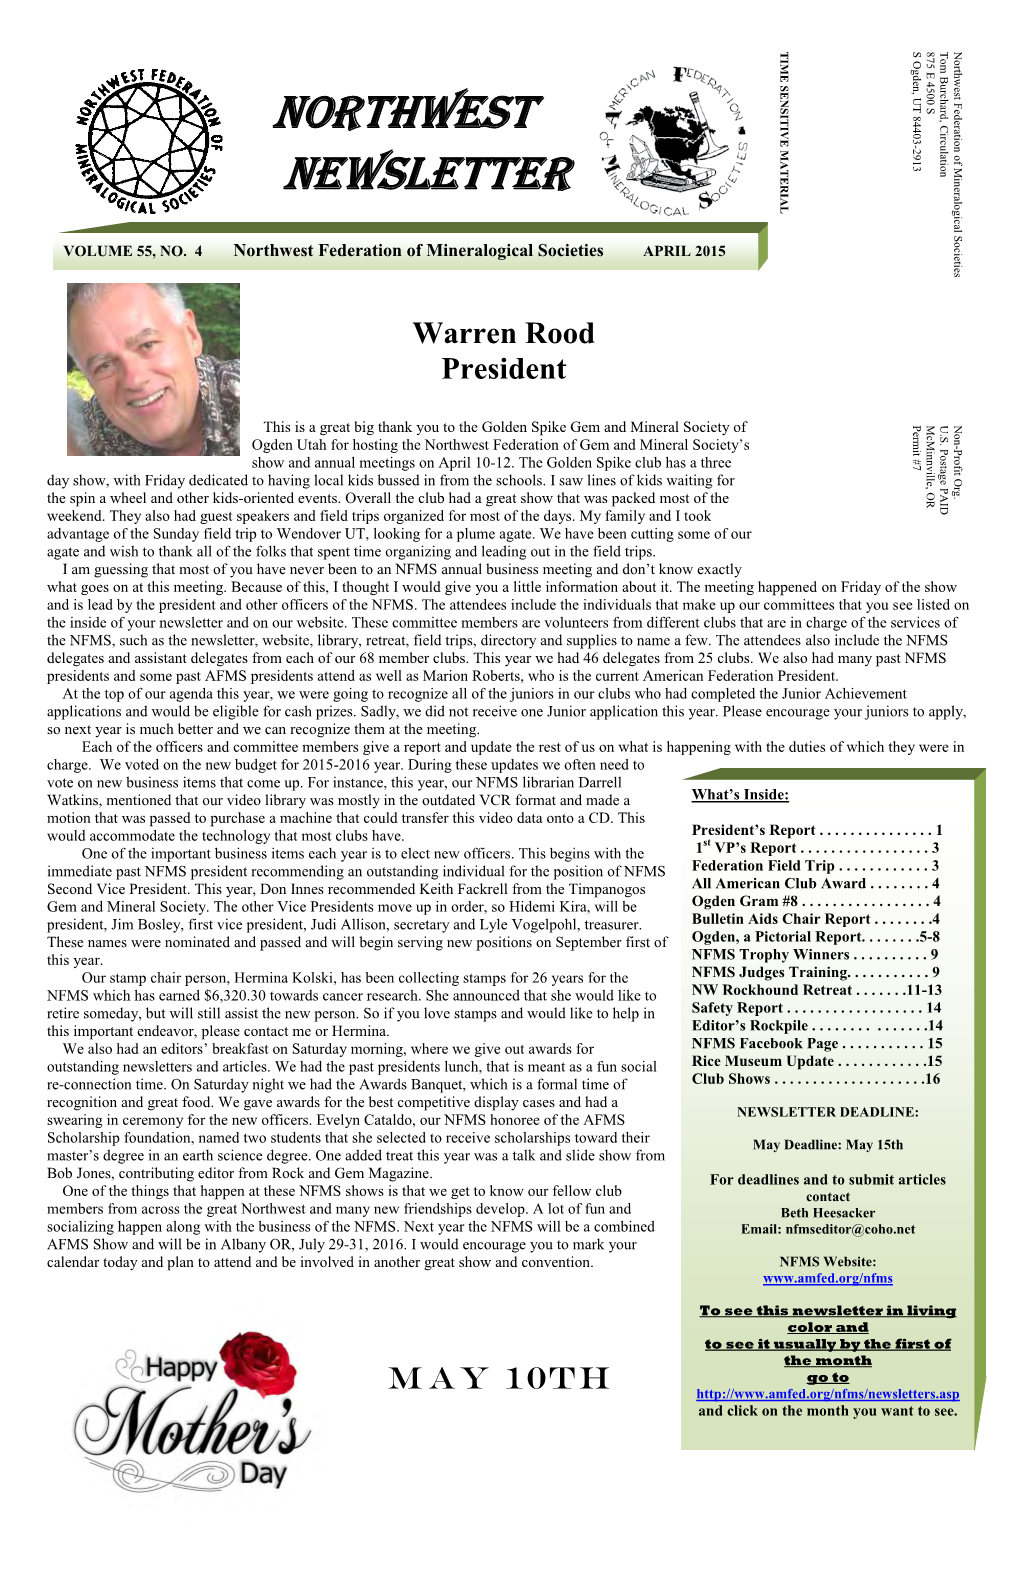 Northwest Newsletter Vol.55 No.4 April 2015